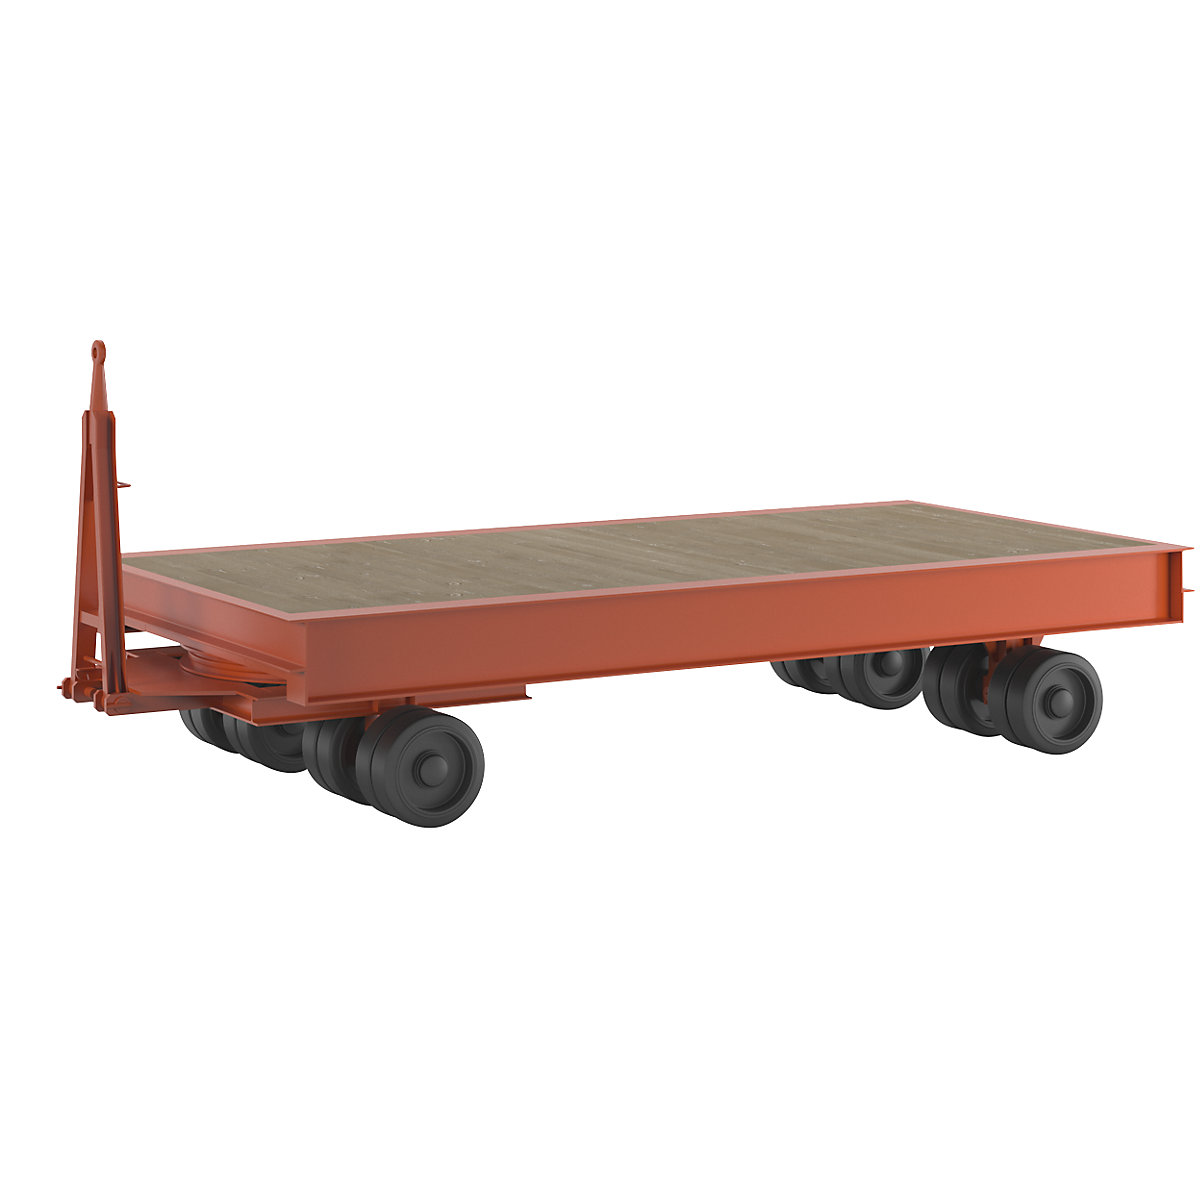 Heavy goods trailer, 25 t, turntable steering, platform 4.0 x 2.0 m-1